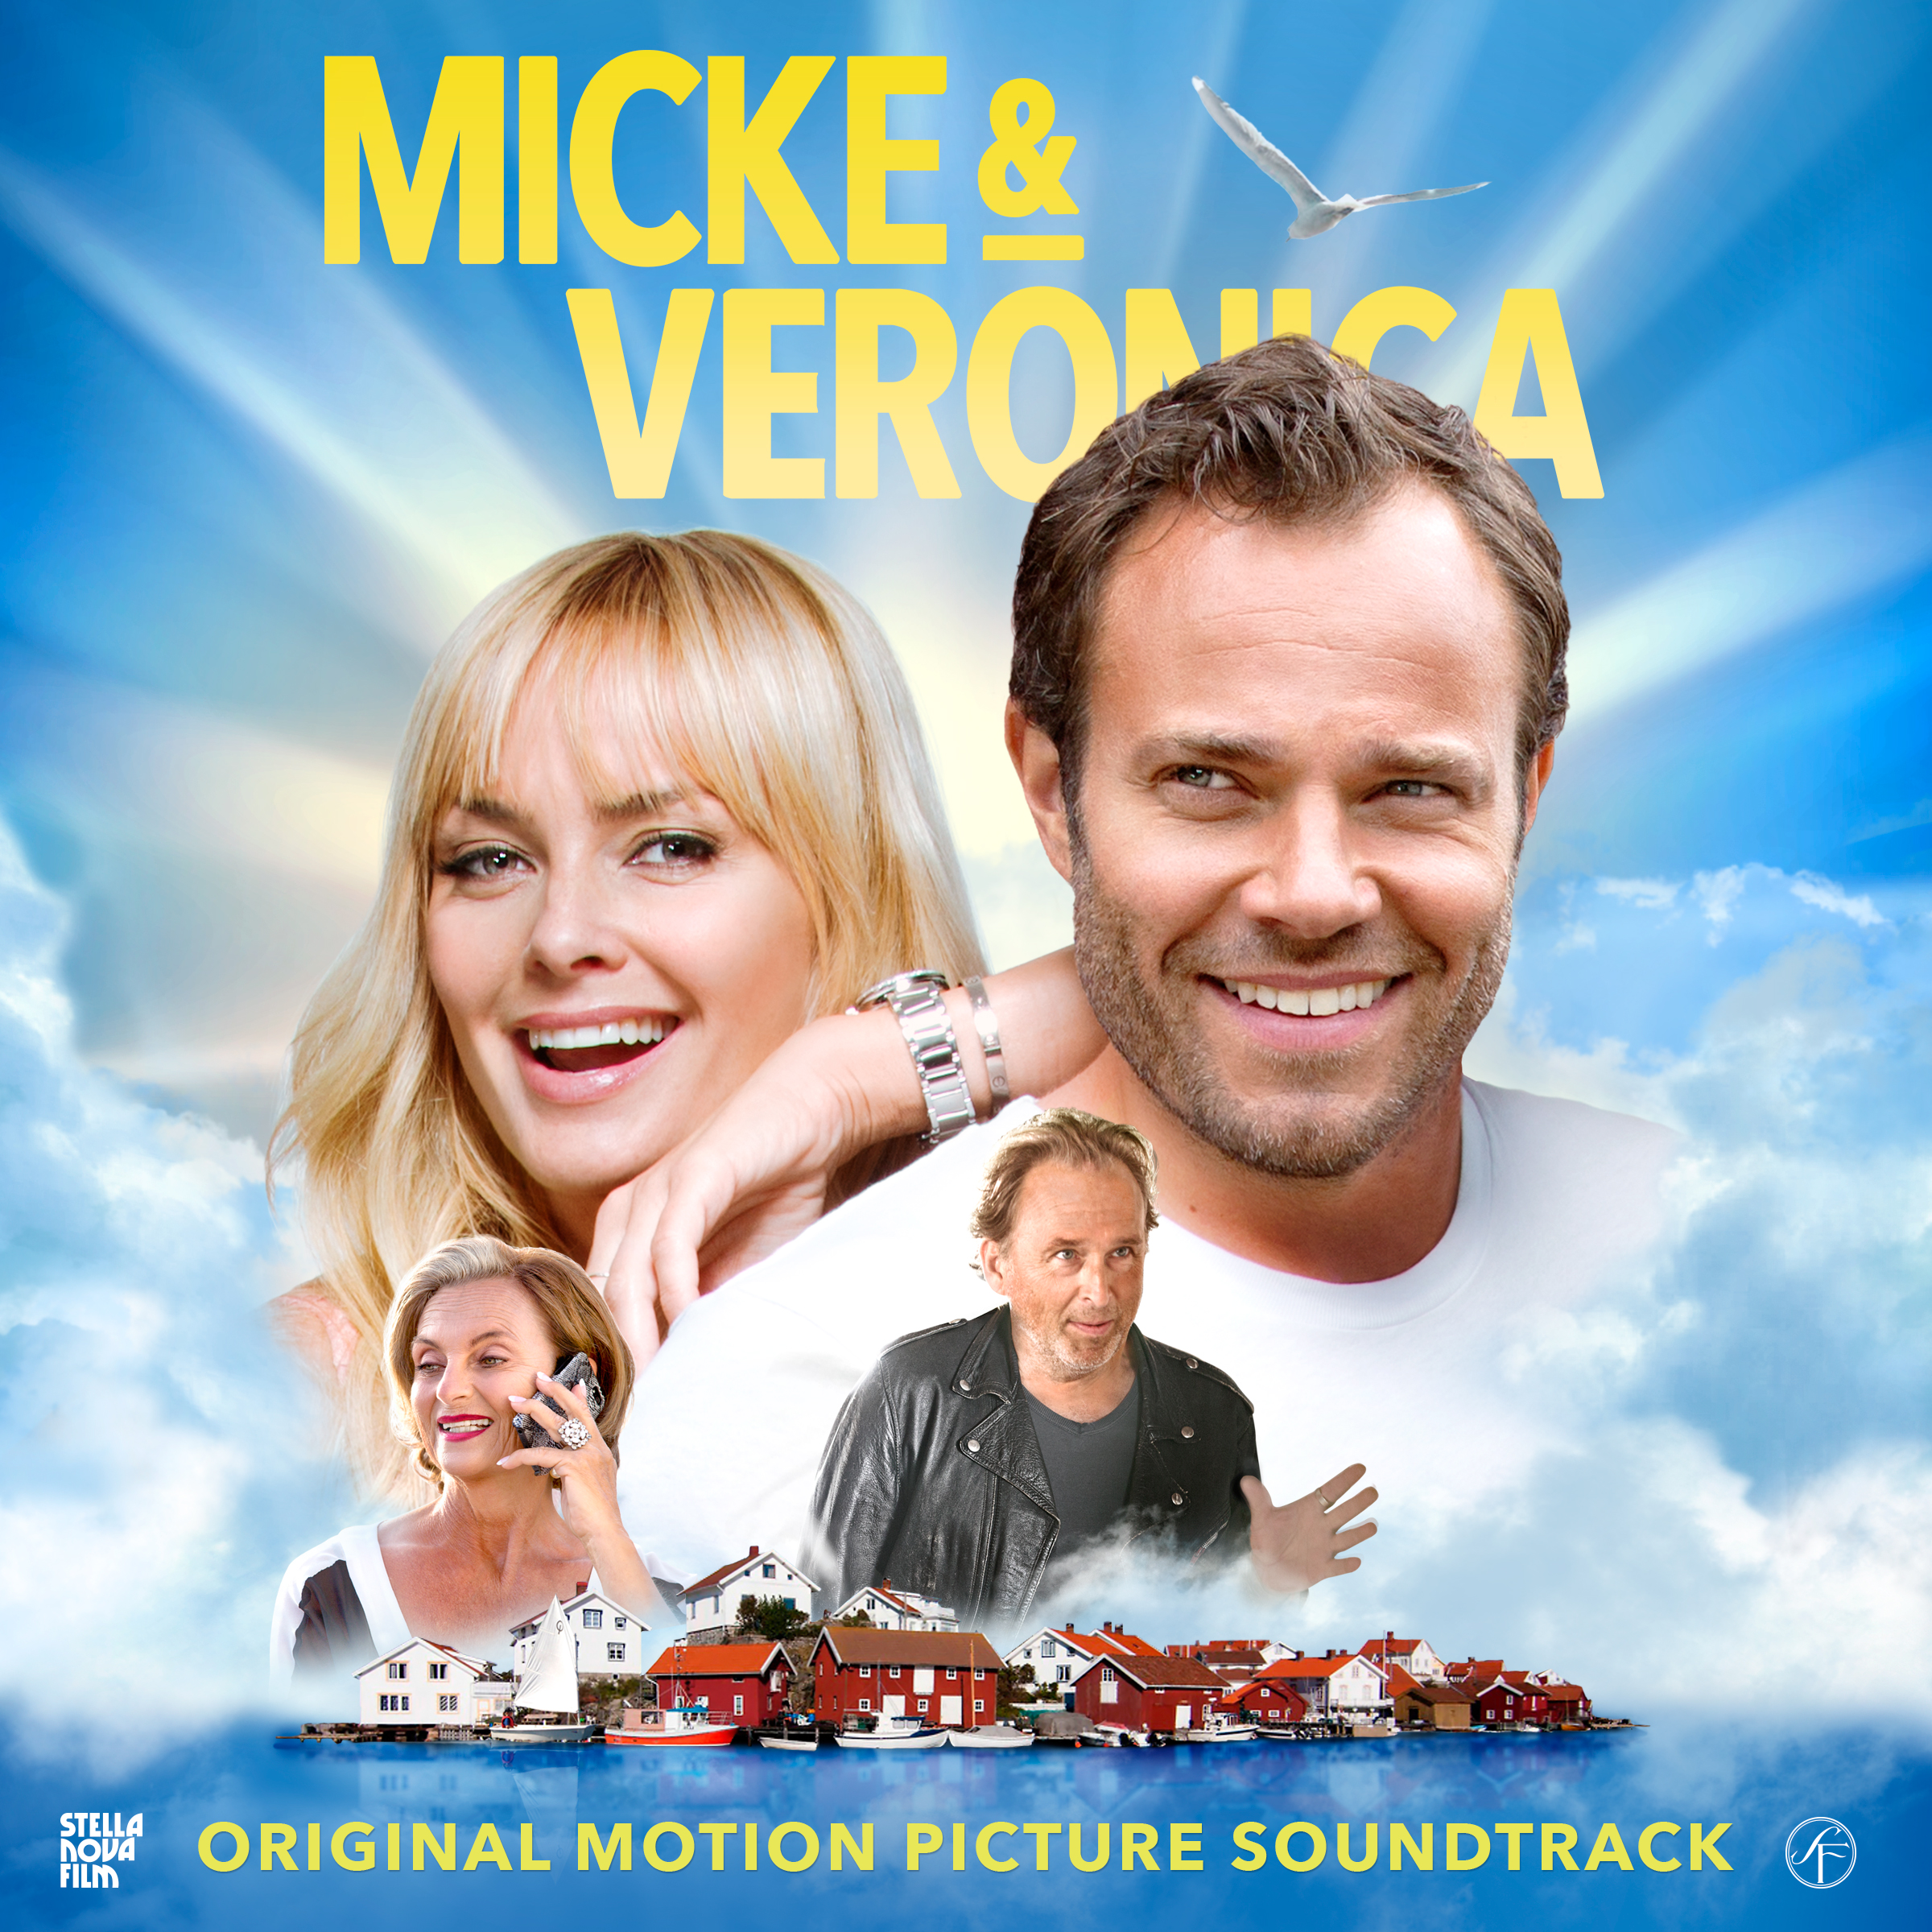 Micke & Veronica Soundtrack artwork